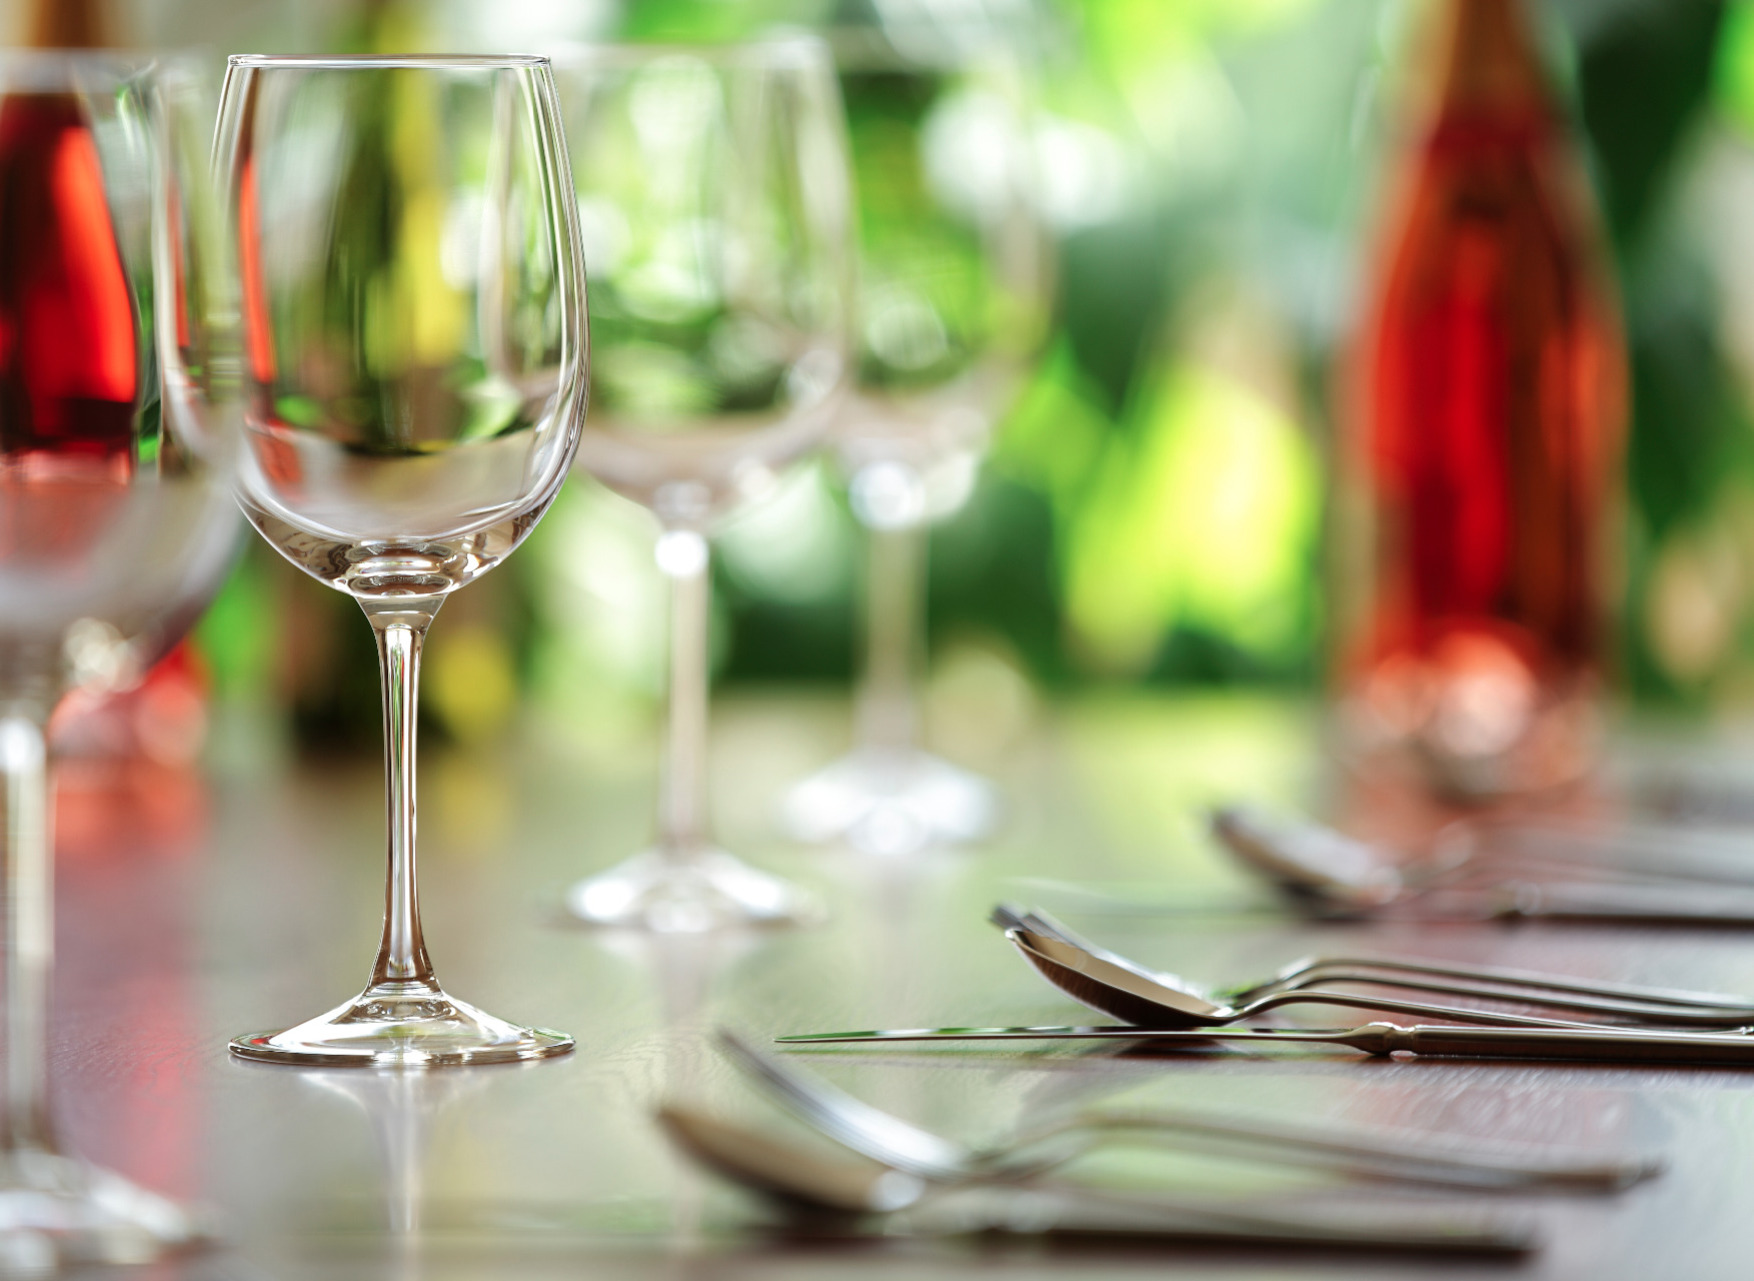 restaurant cafe cutlery and wine glasses HARROGATE LIFESTYLE RESTAURANTS